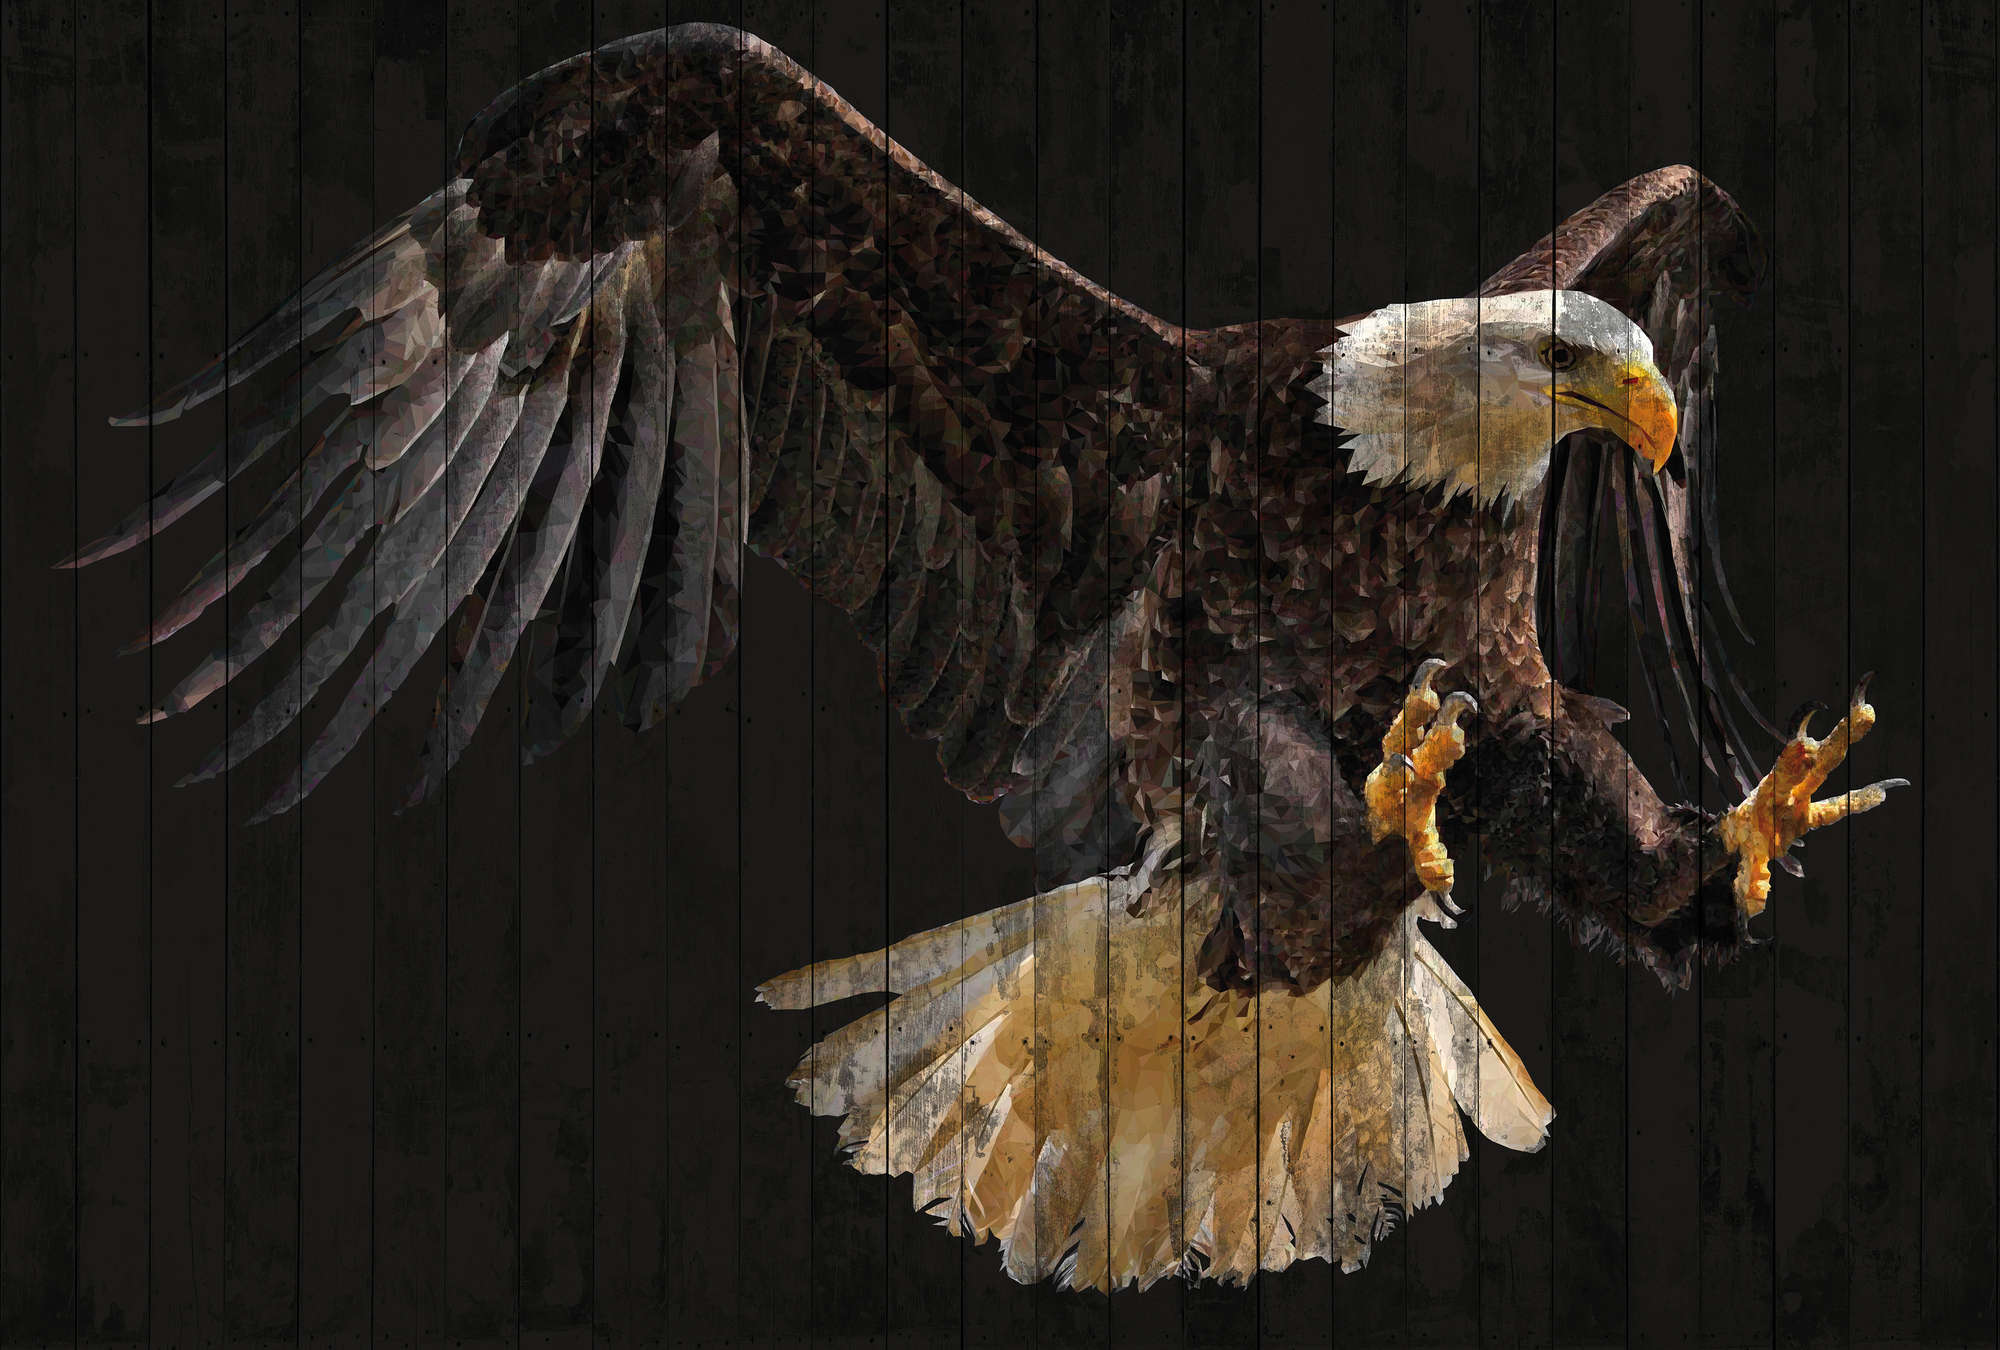             Fotomural águila, motivo animal y aspecto de madera - marrón, naranja, negro
        